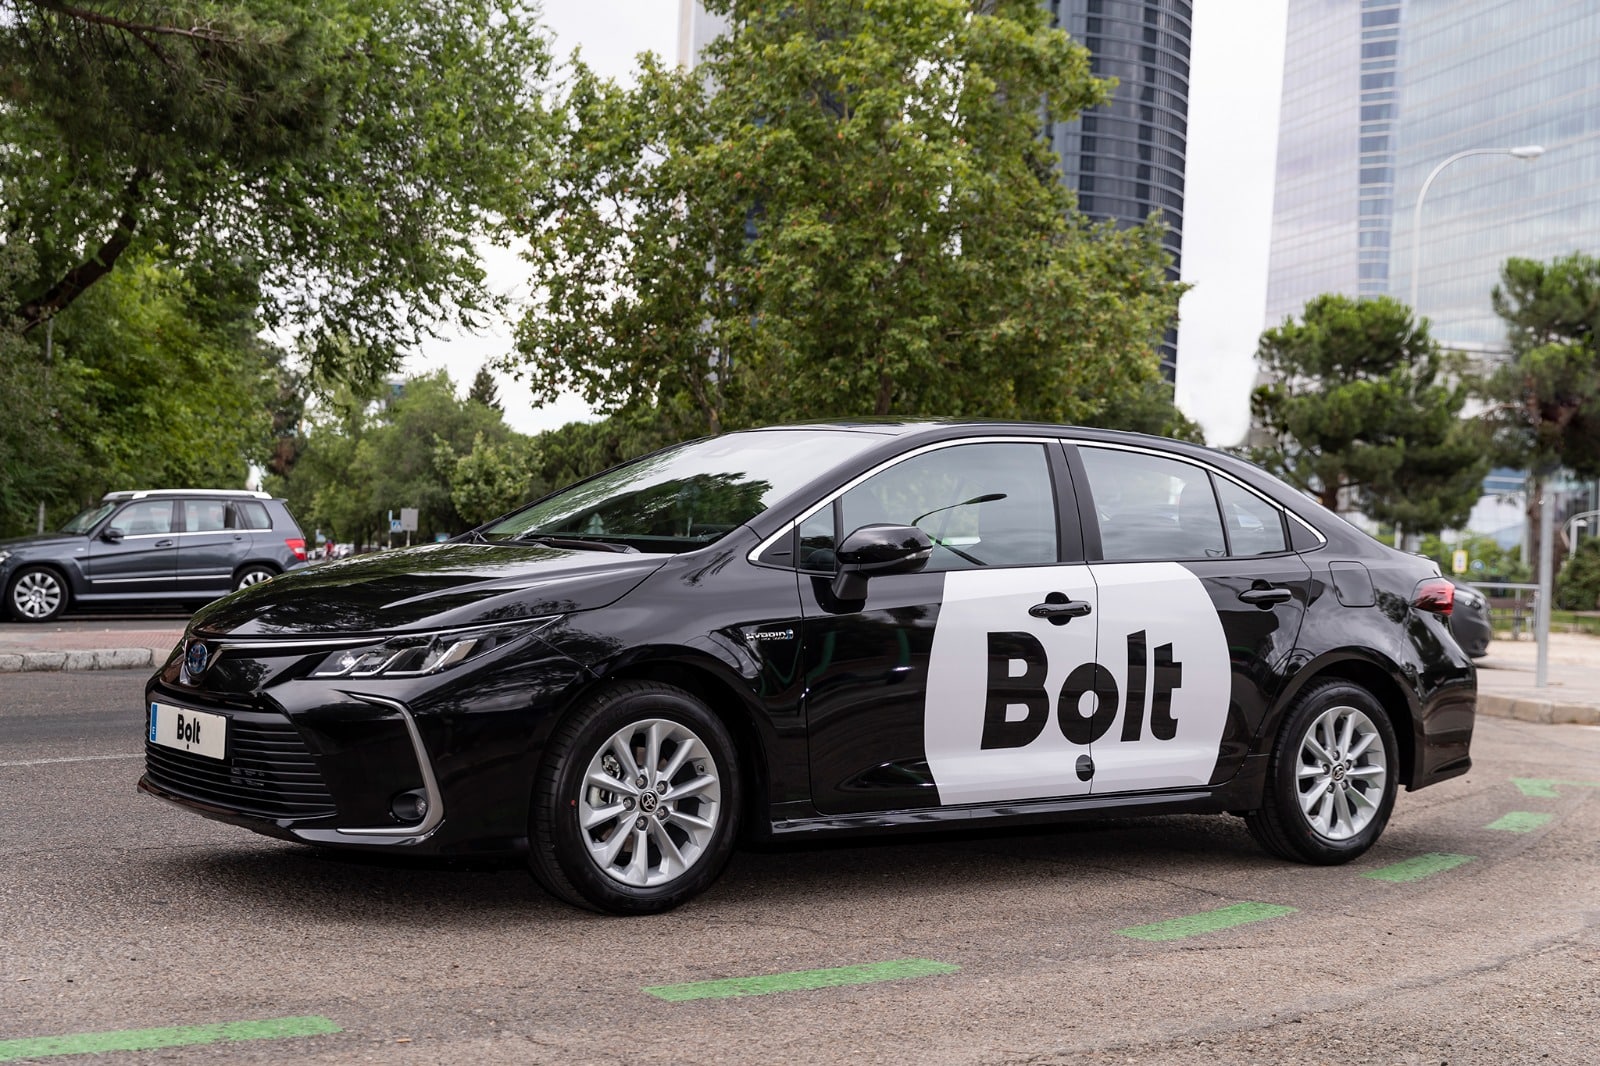 Imagen de un coche de Bolt.